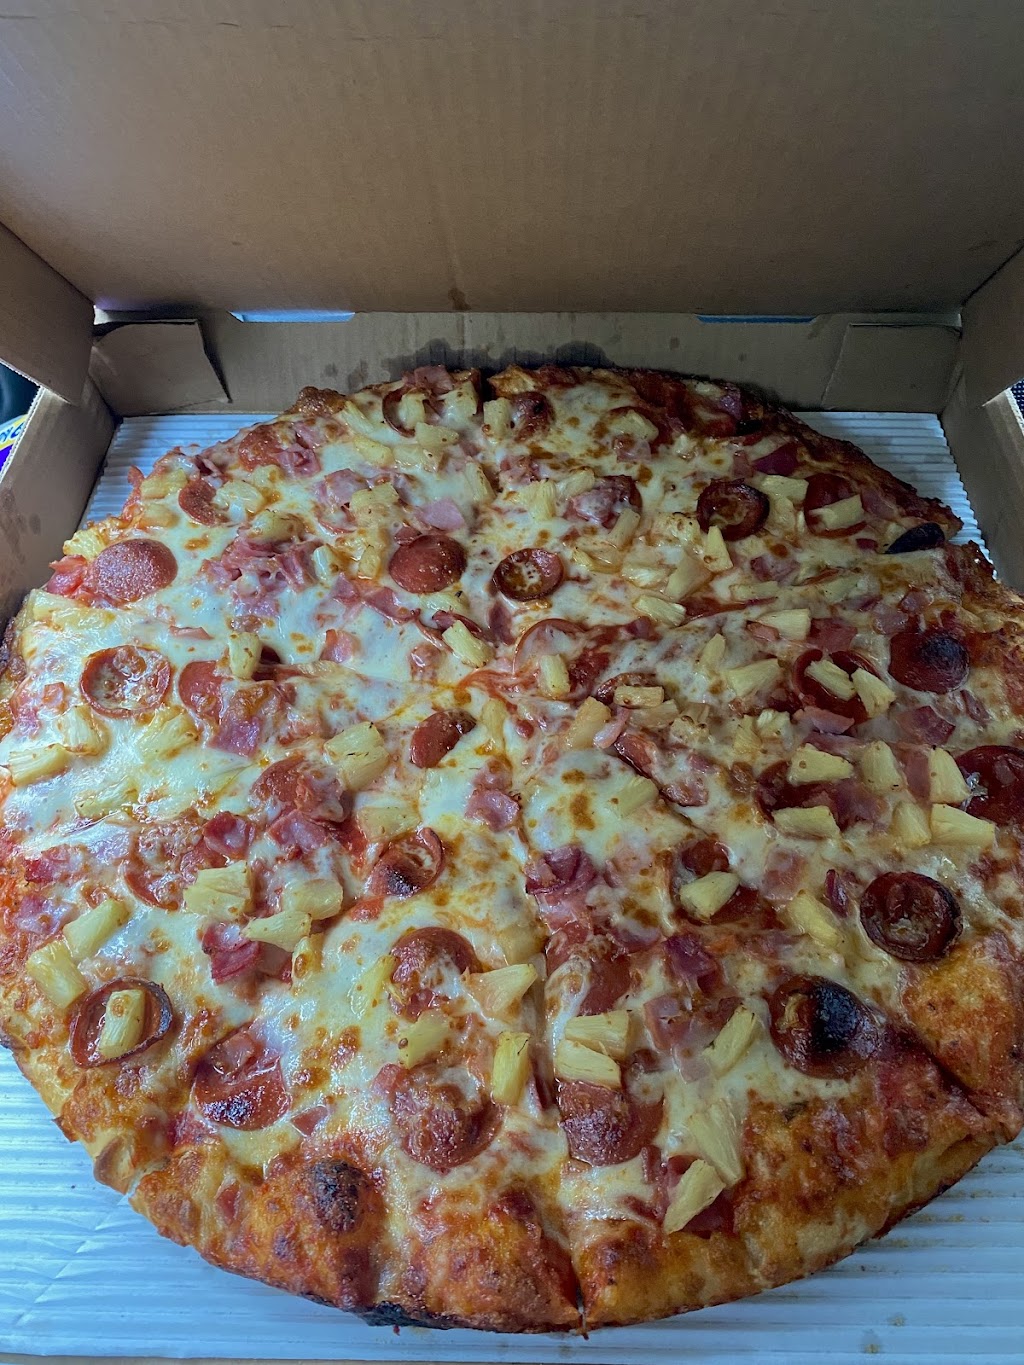 Hometown Pizza | 7010 Gateway Park Dr, City of the Village of Clarkston, MI 48346, USA | Phone: (248) 620-4100